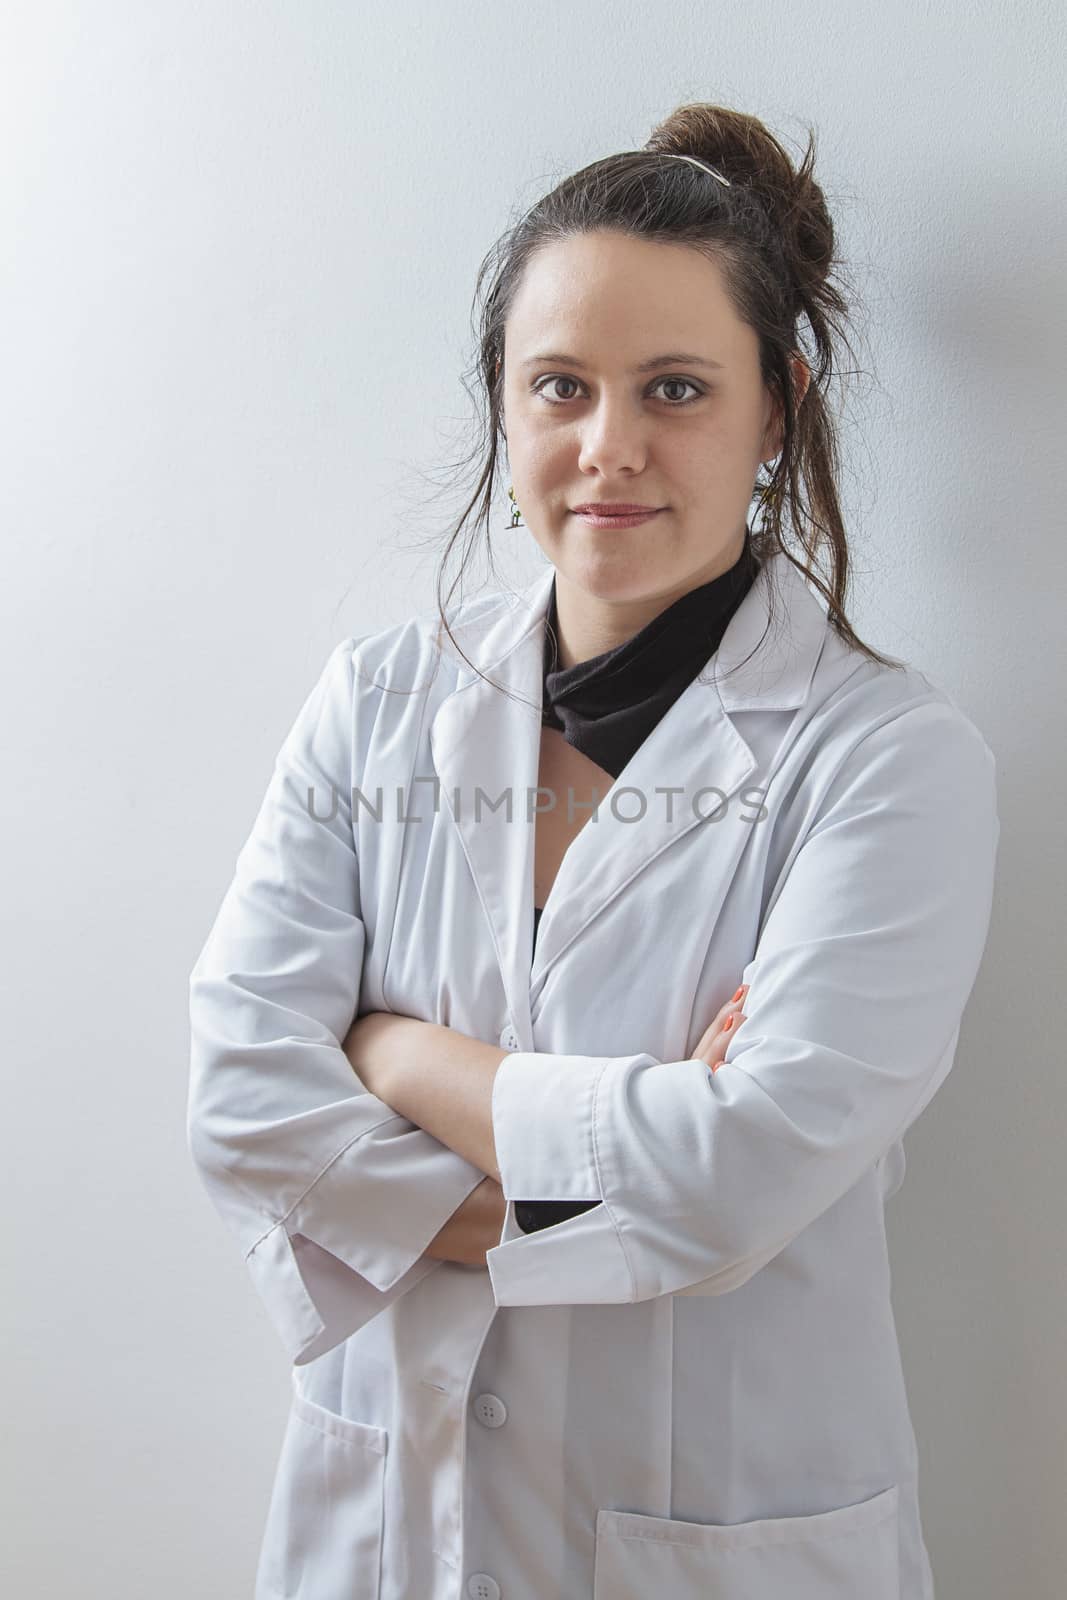 Woman doctor by mypstudio